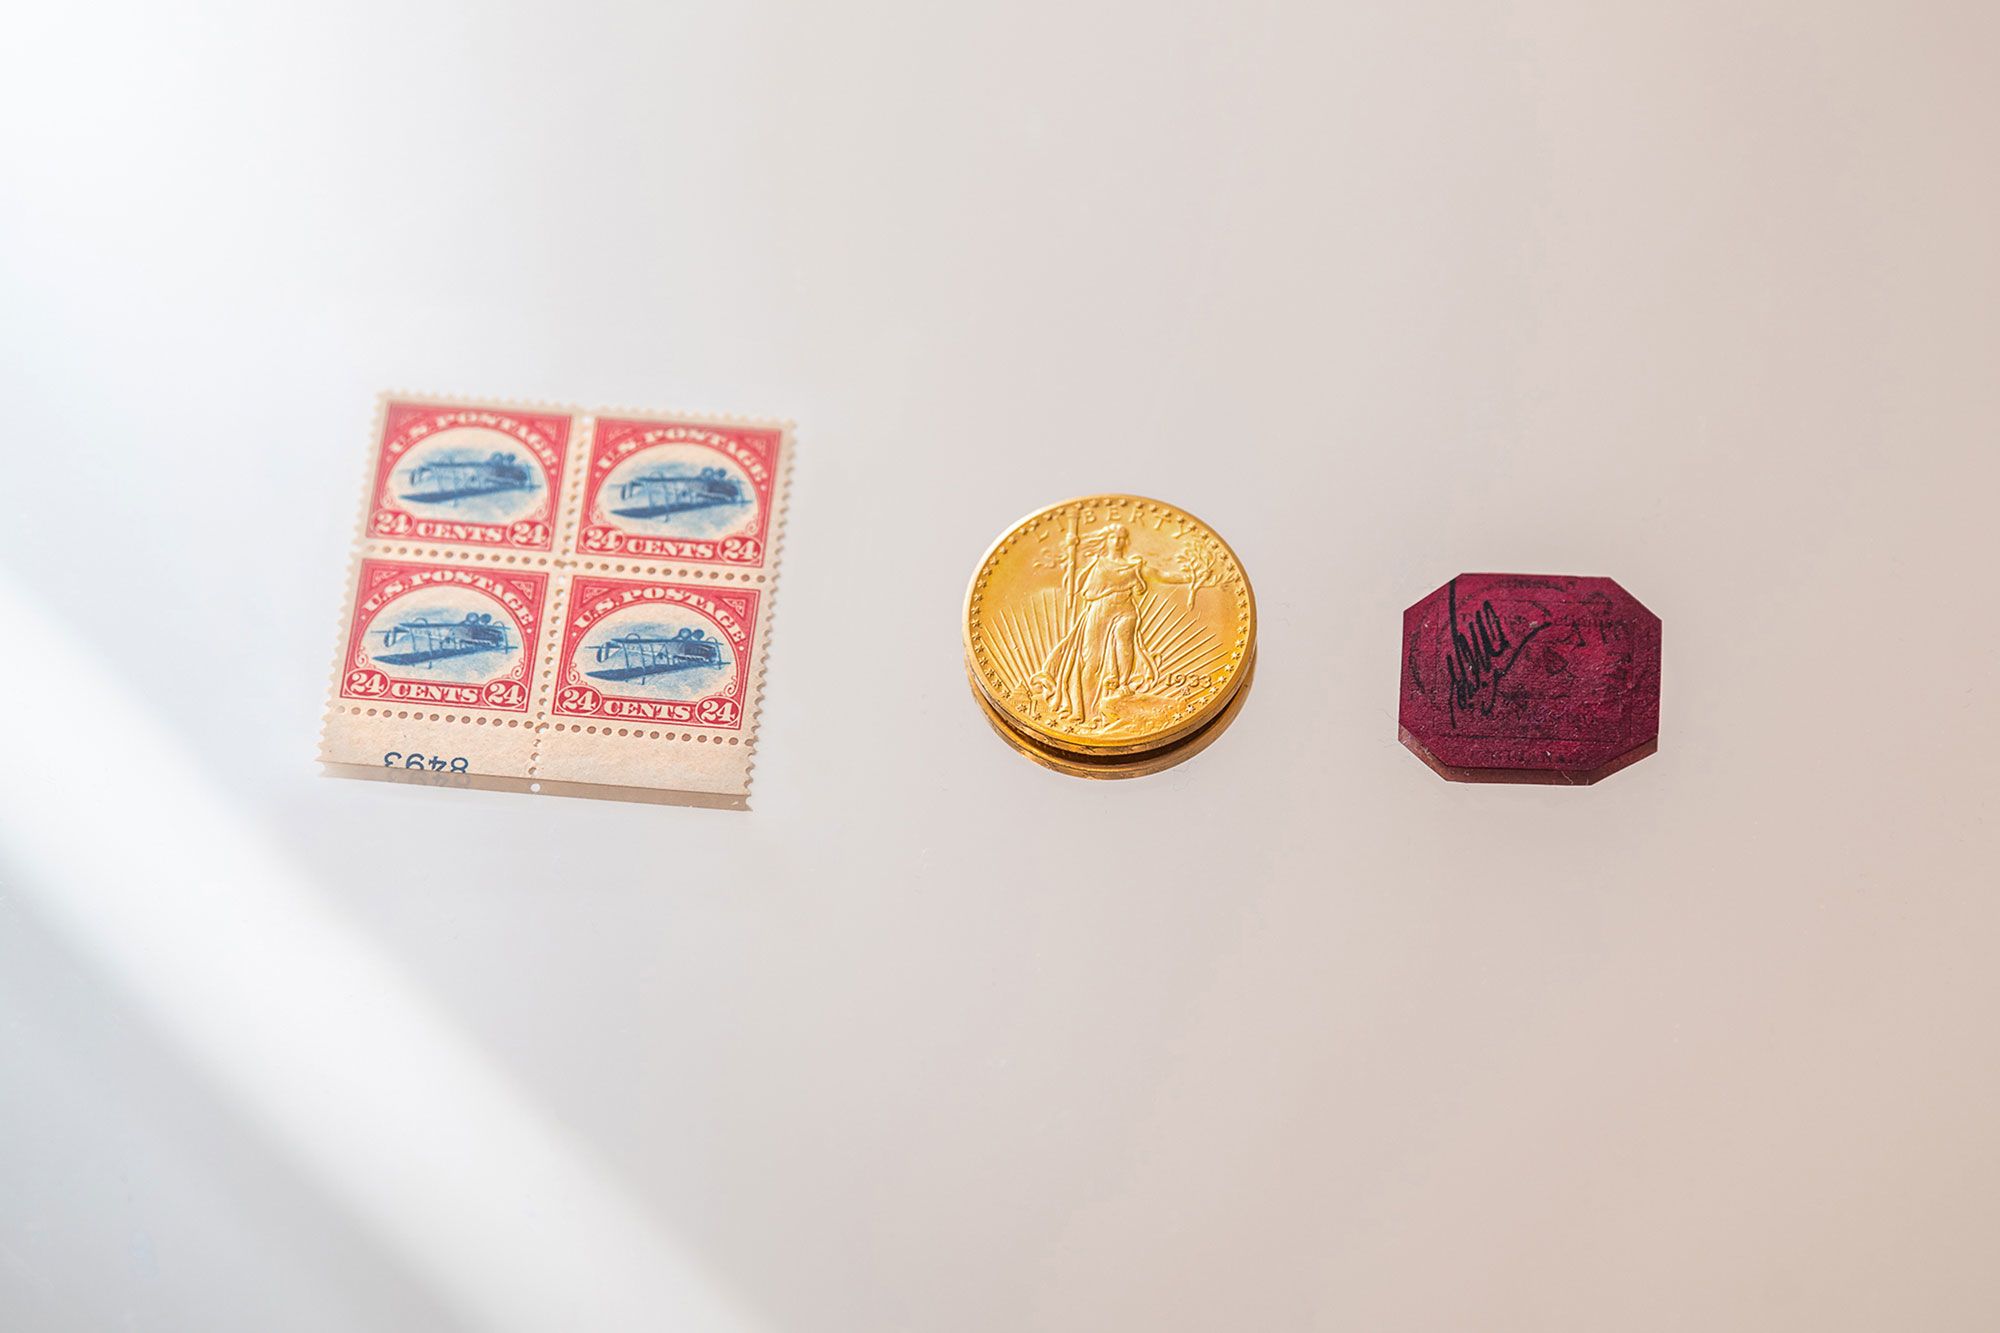 02 guiana stamp auction sothebys